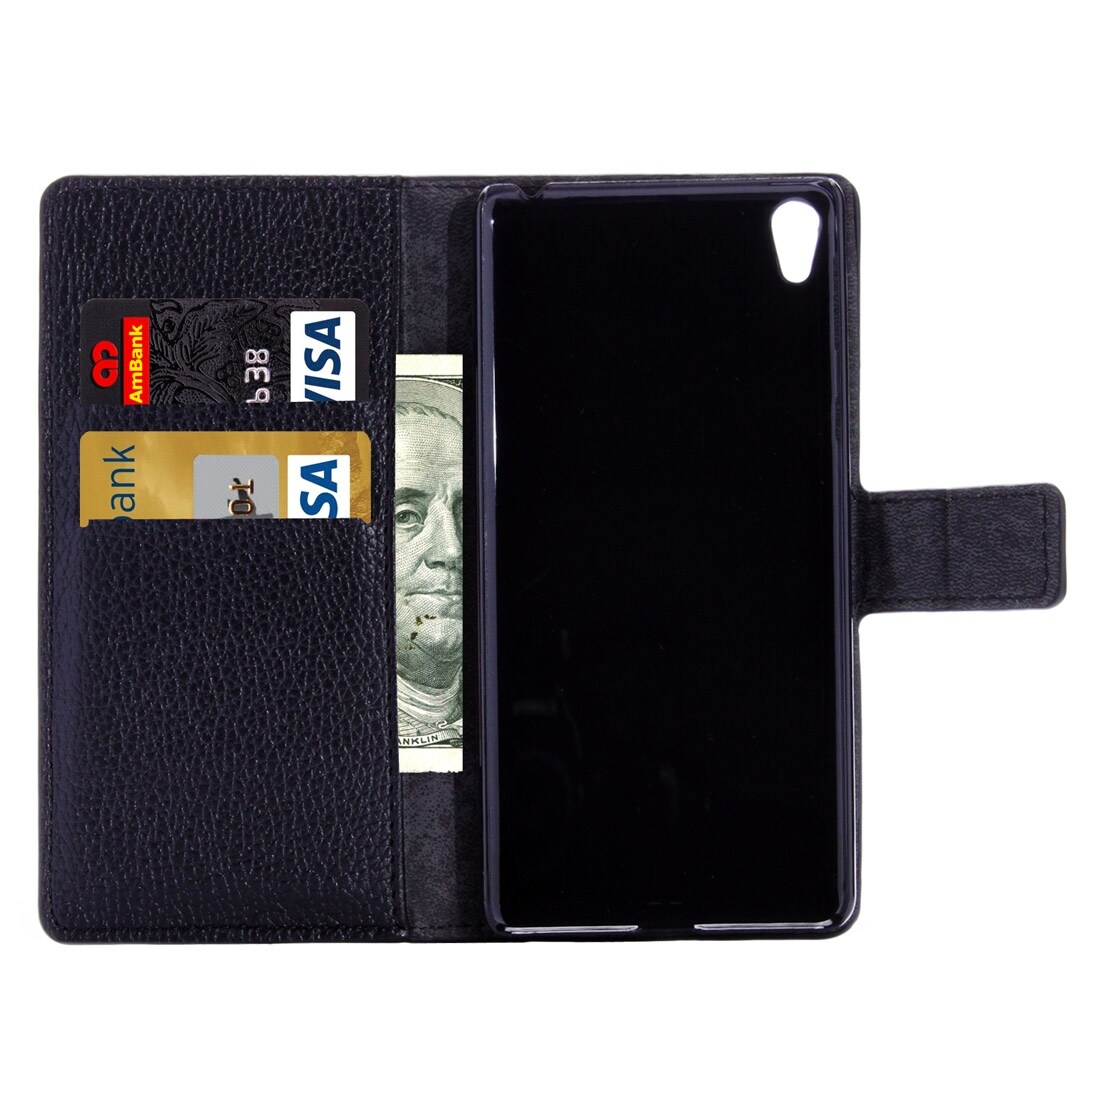 Plånbok fodral Sony Xperia E5